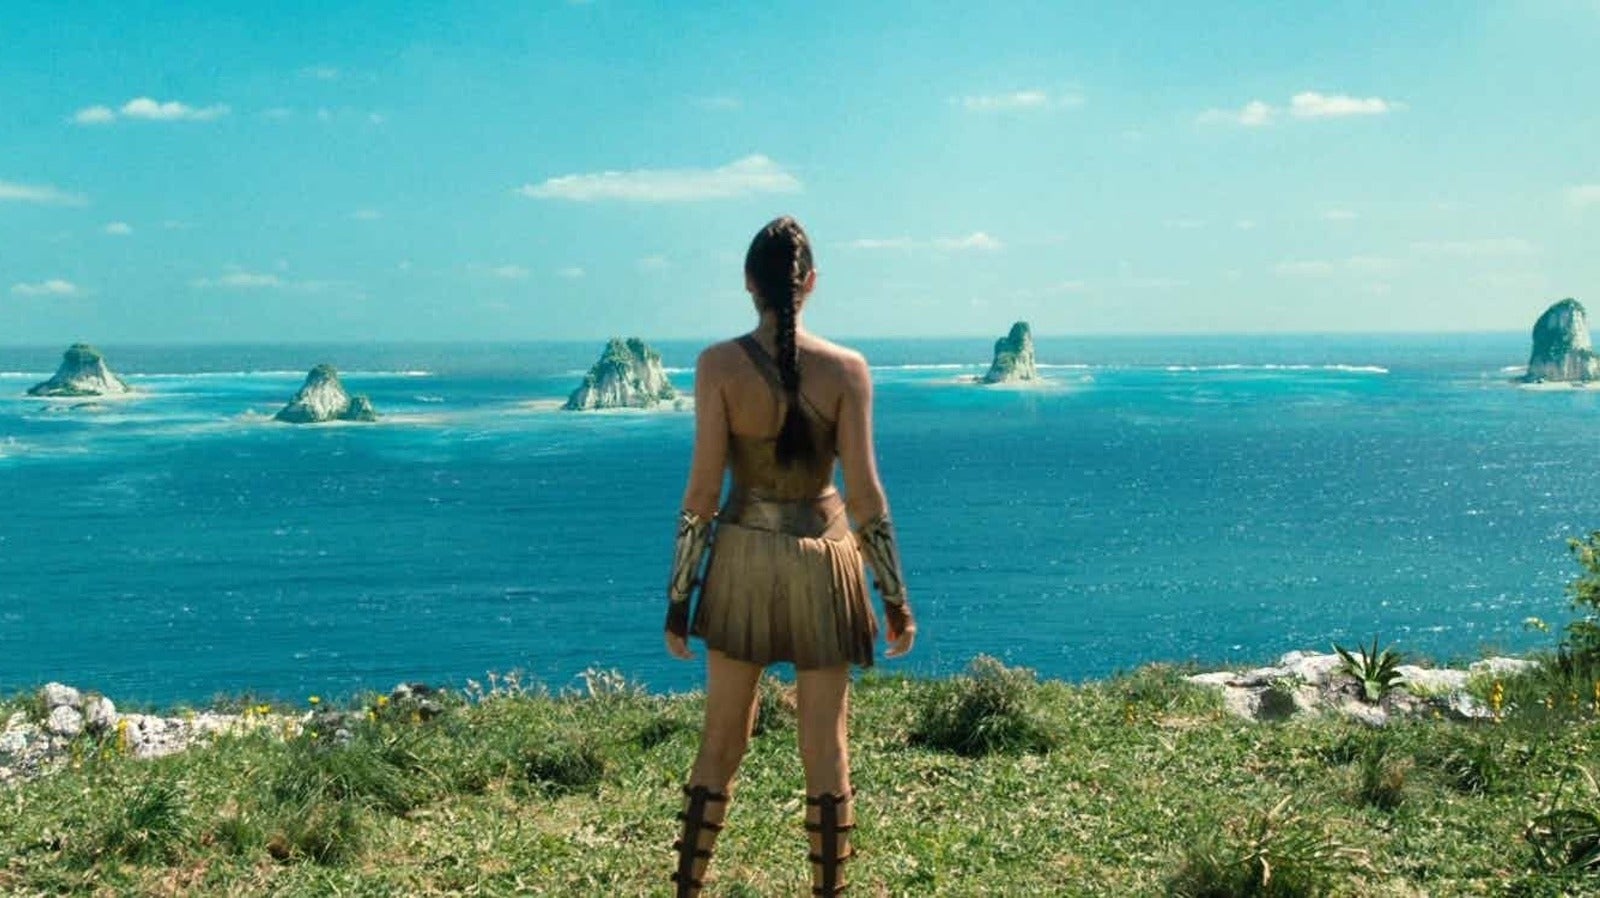 Diana overlooks Paradise Island